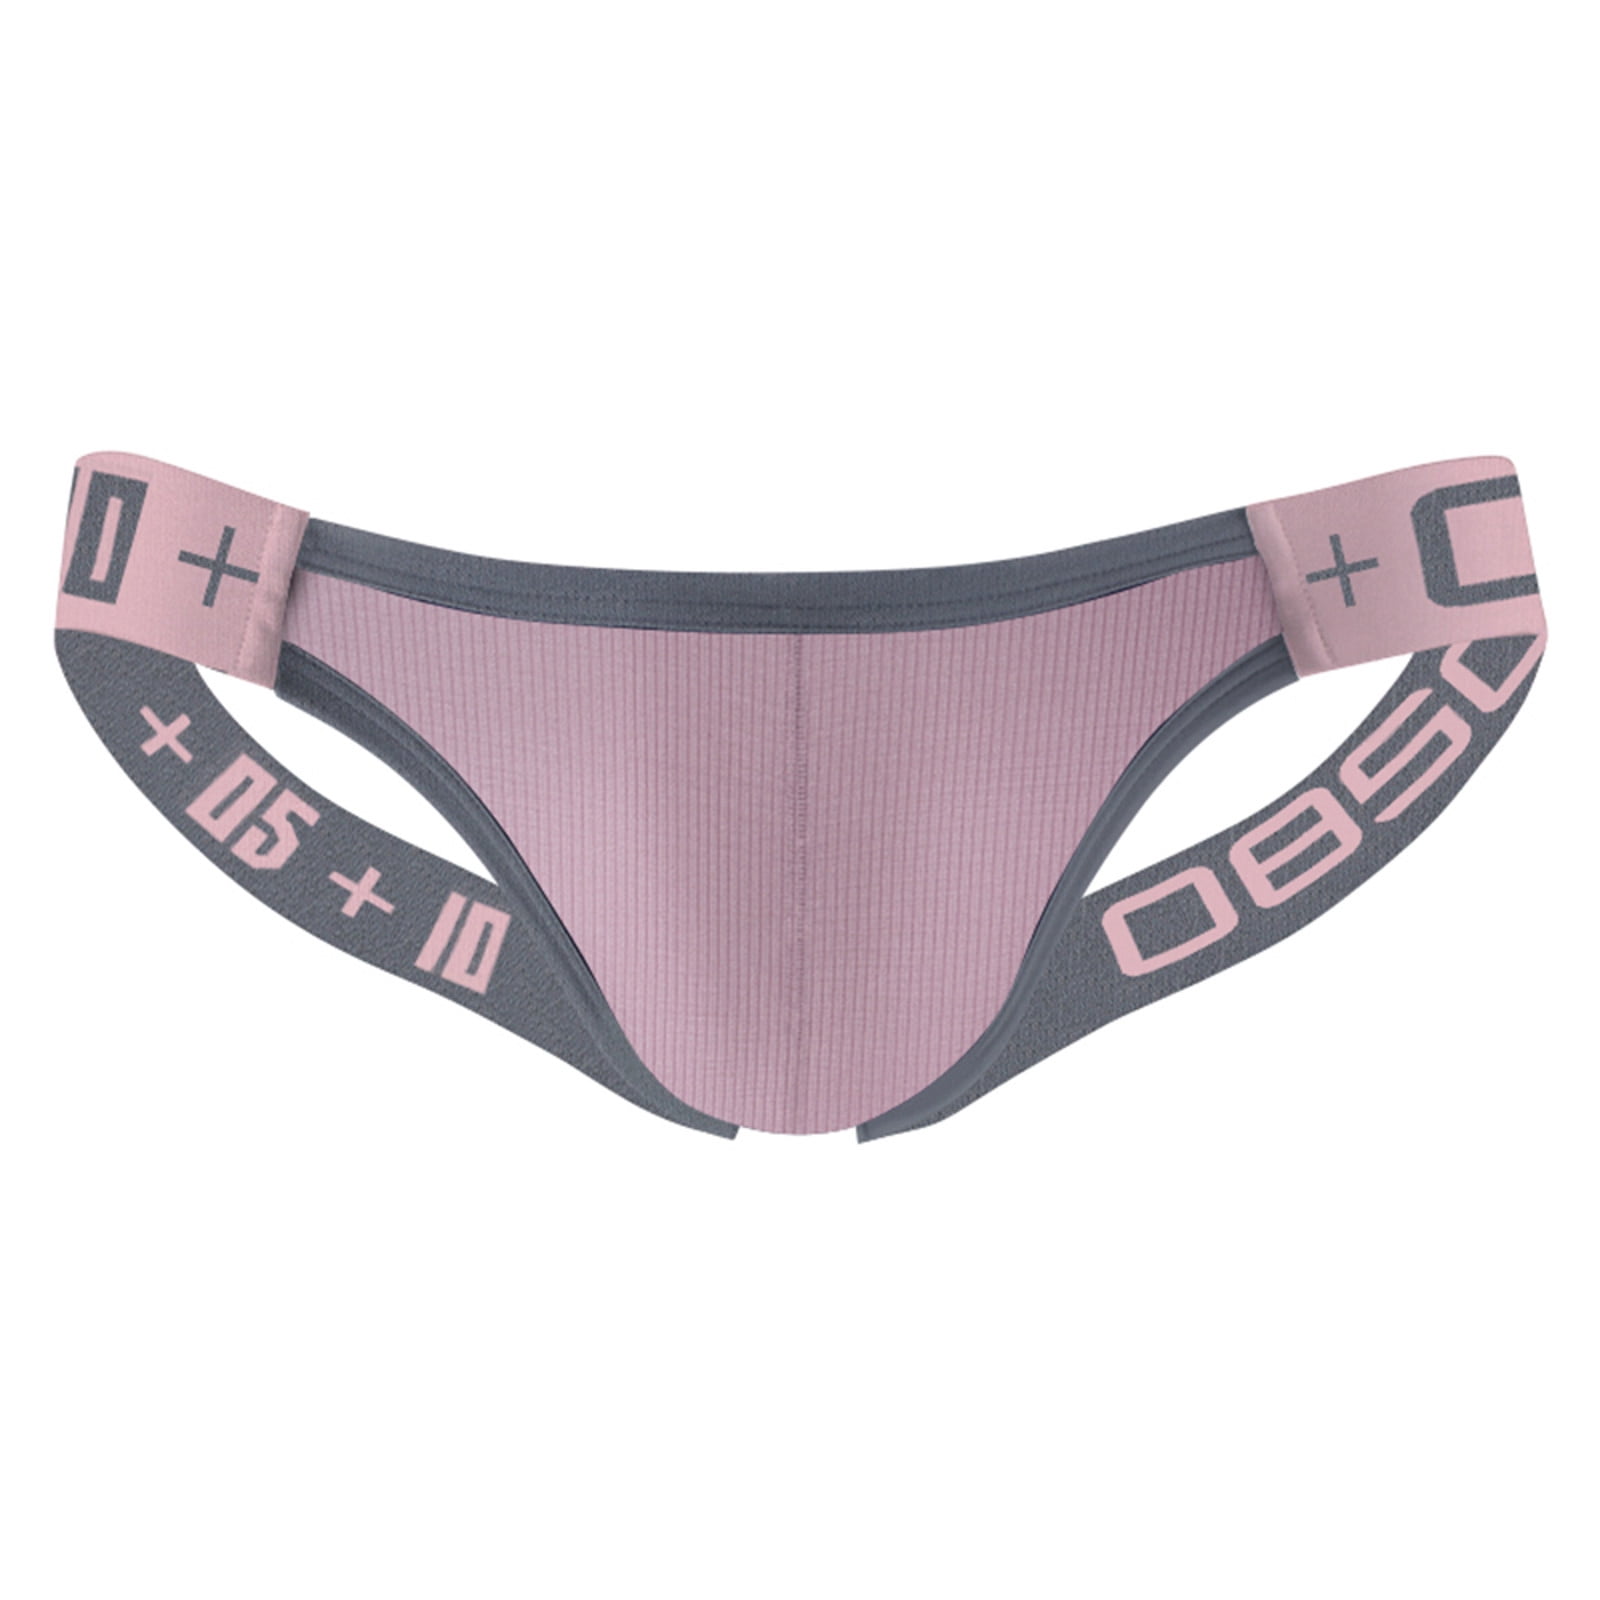 Baocc Mens Thong Men's Sexy Jockstrap Breathable Underwear